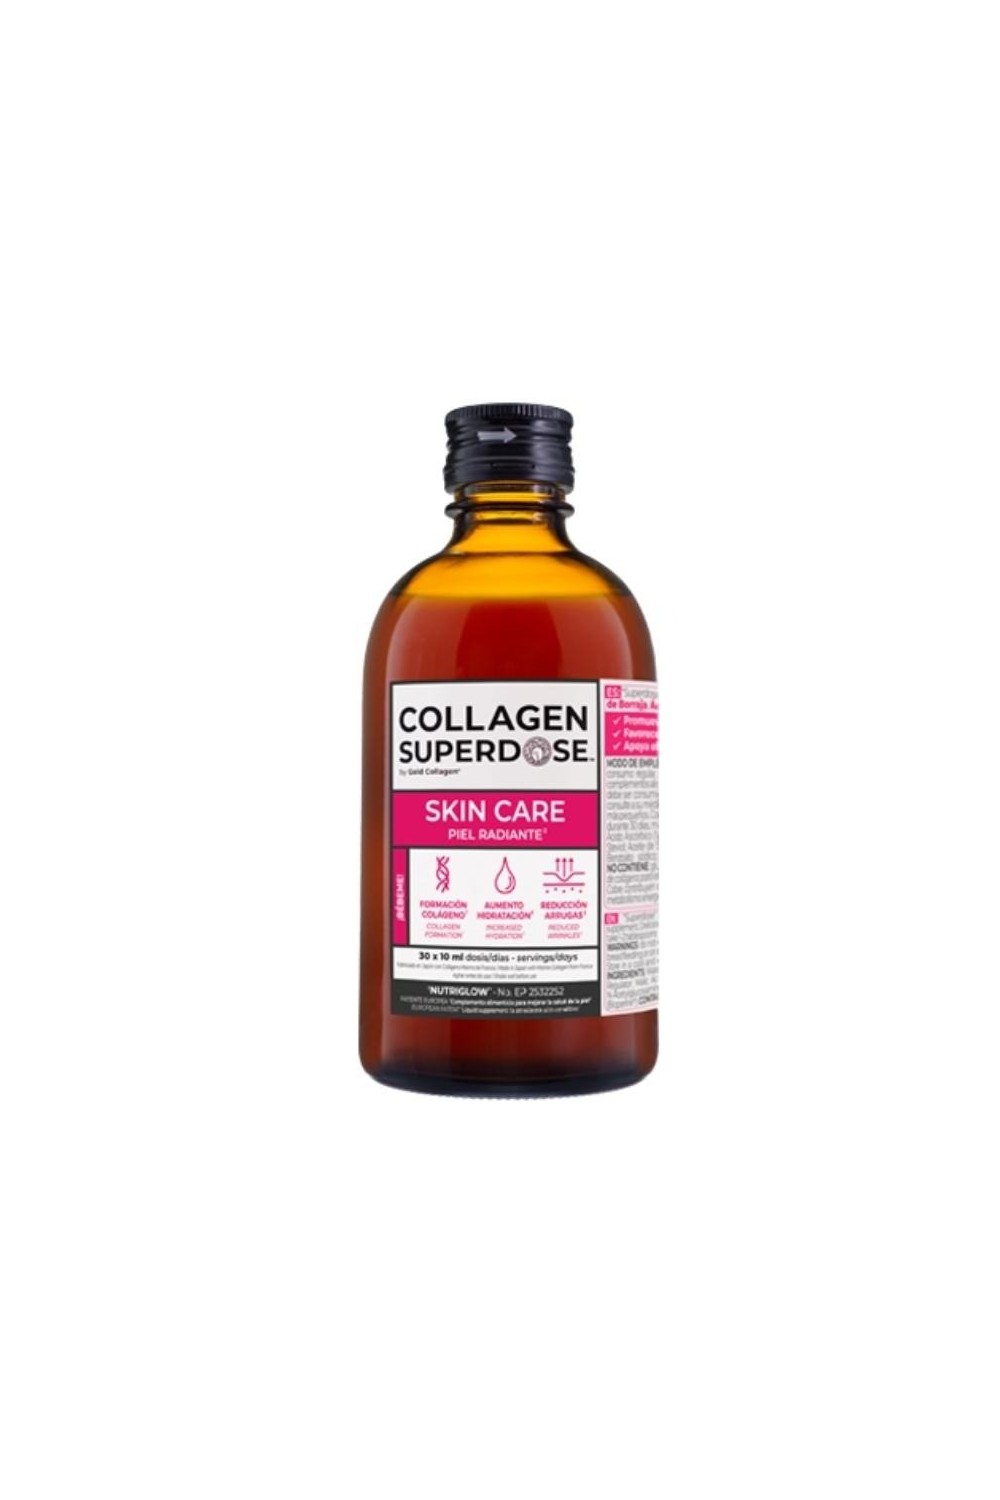 Gold Collagen Superdose Radiant Skin 300ml Bottle